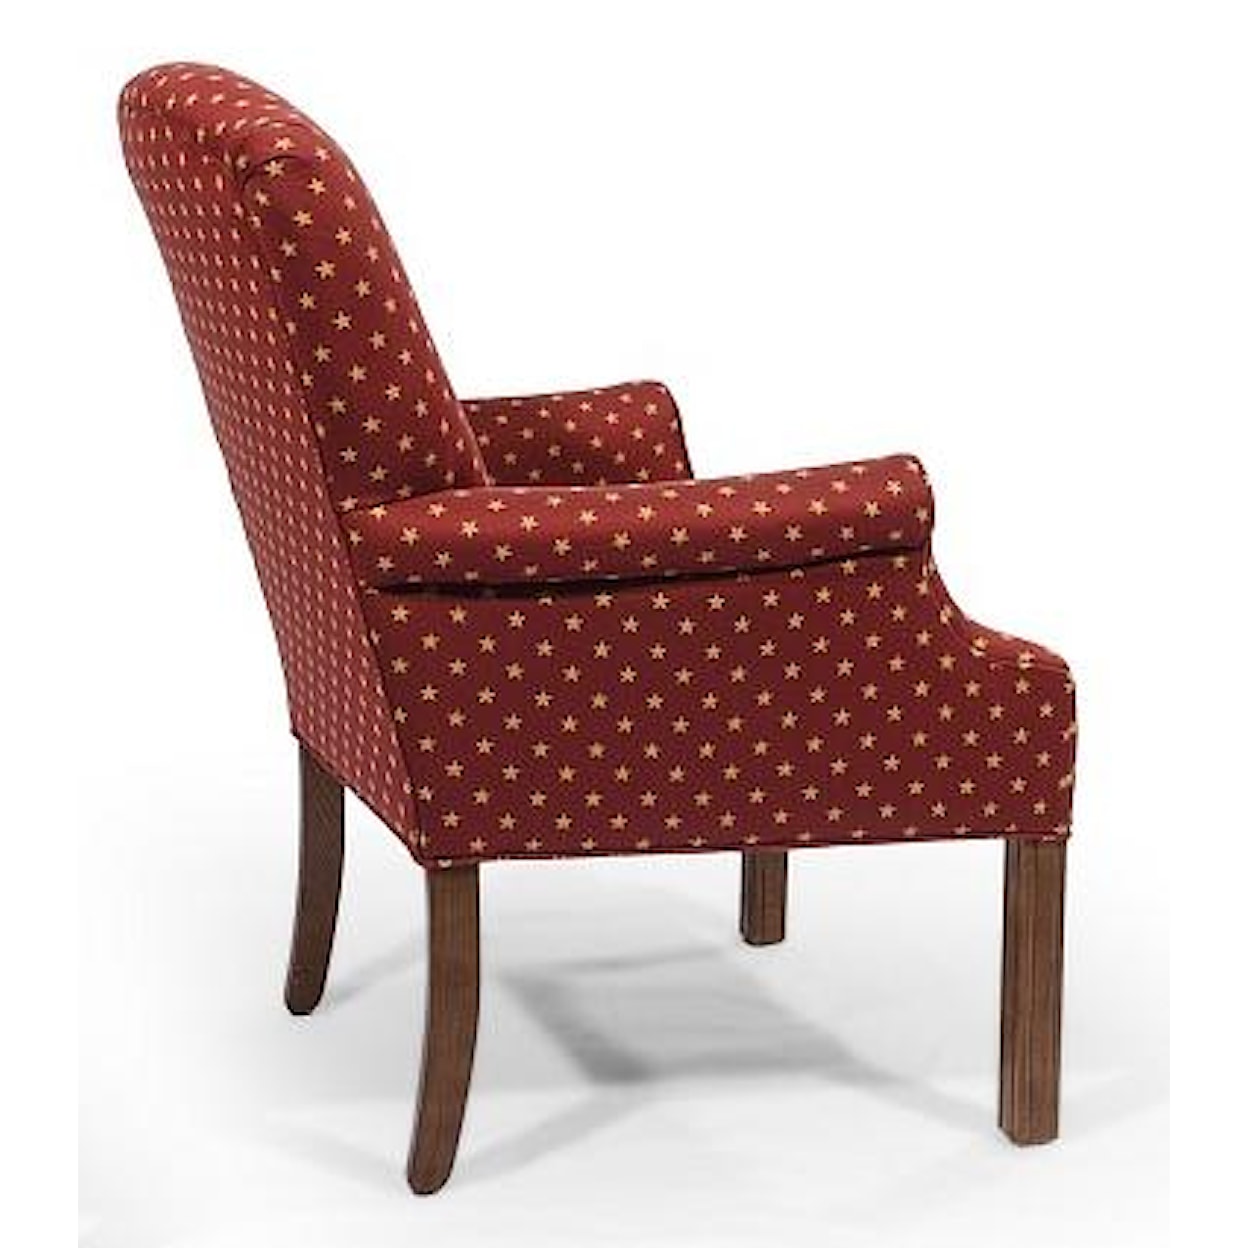 Lancer HomeSpun Upholstered Chair